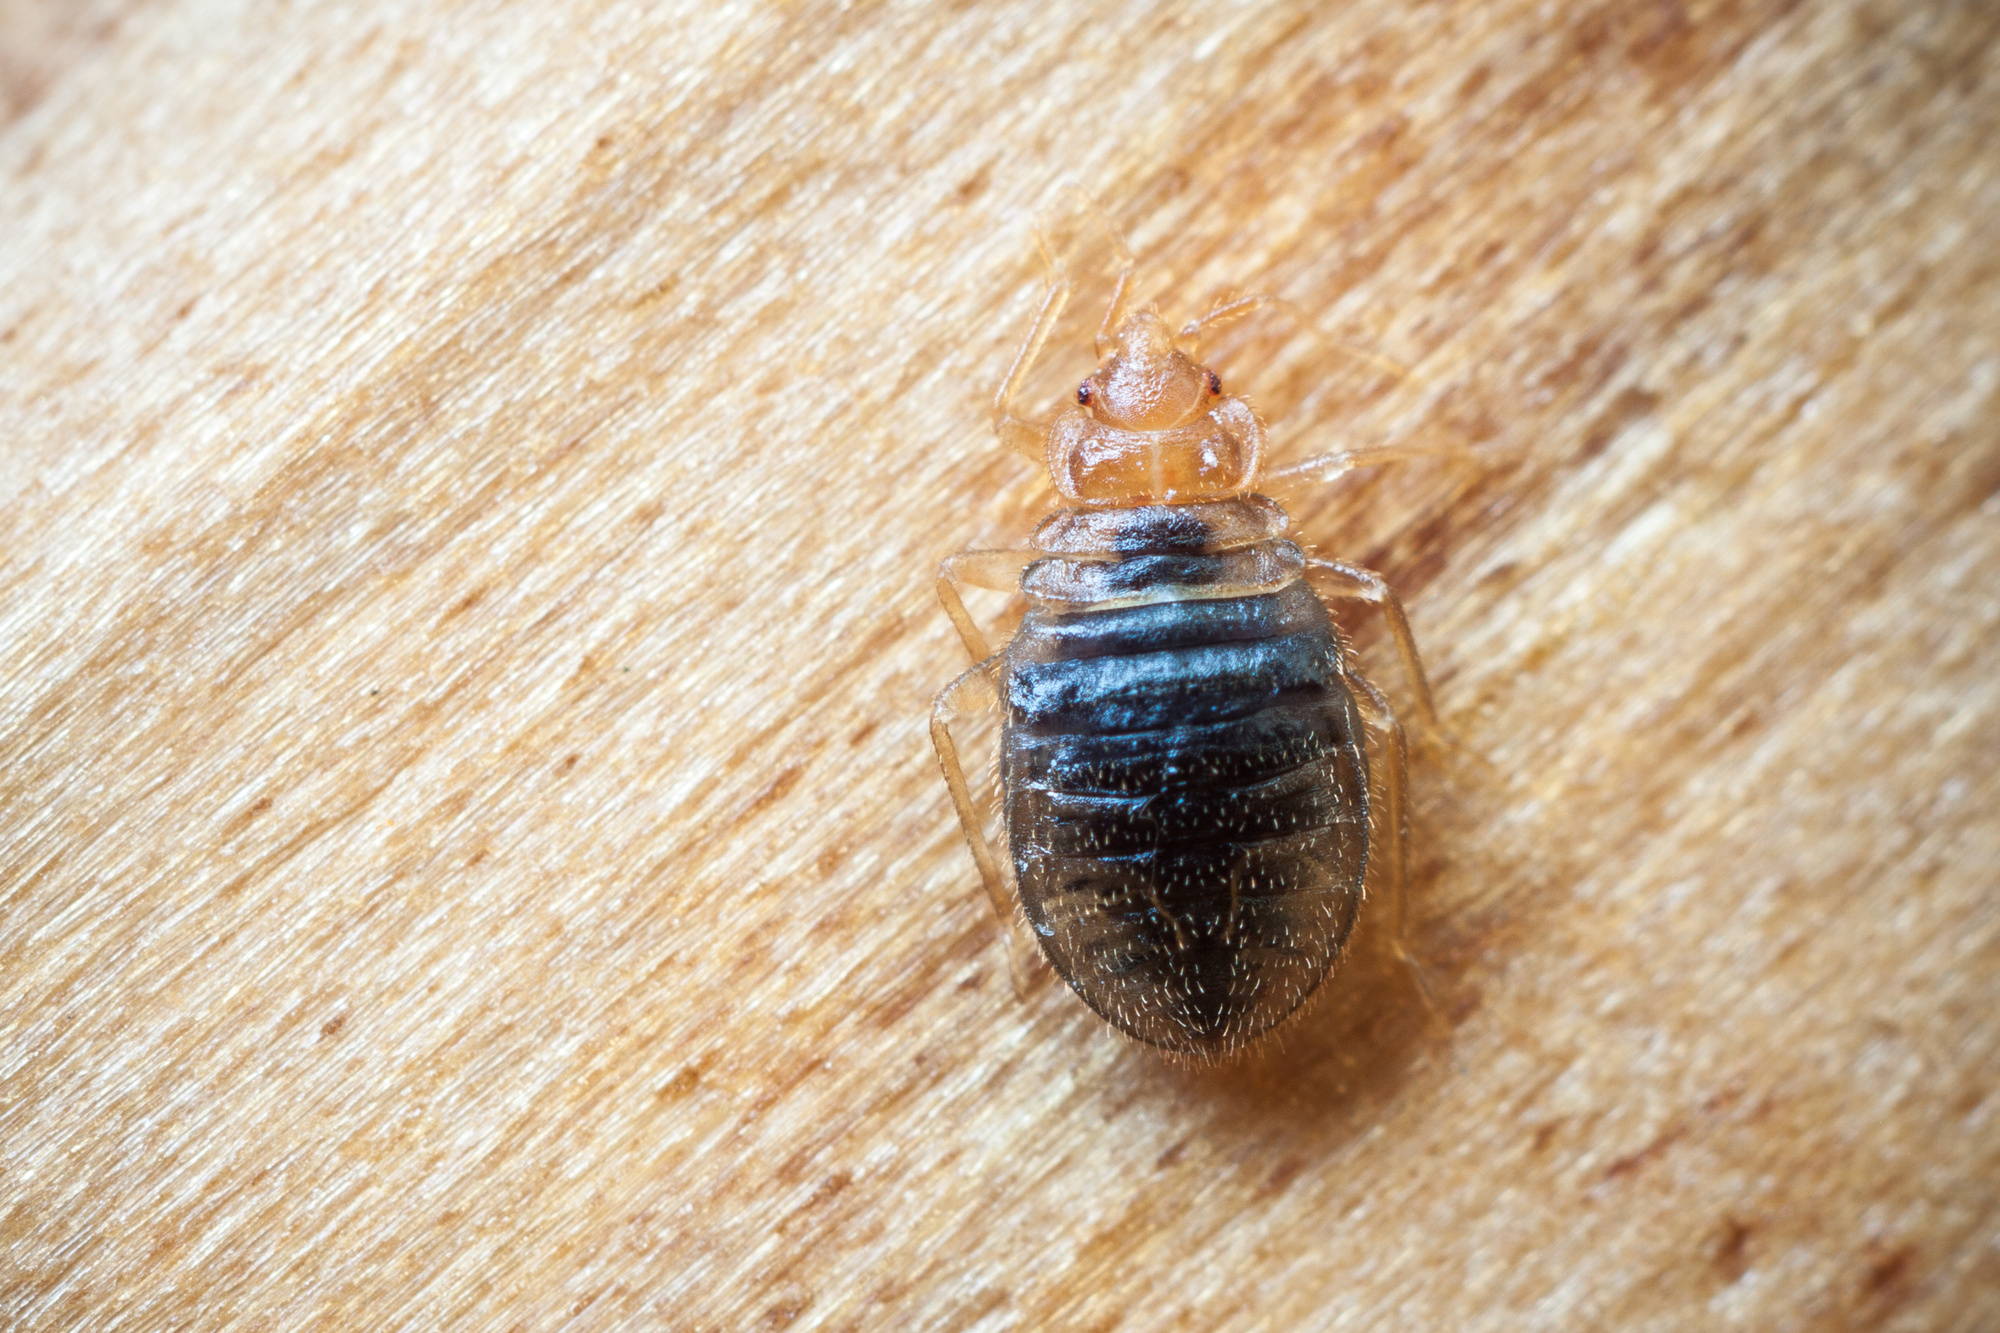 Chinches contra pulgas: ¿que plaga ataca mi hogar?